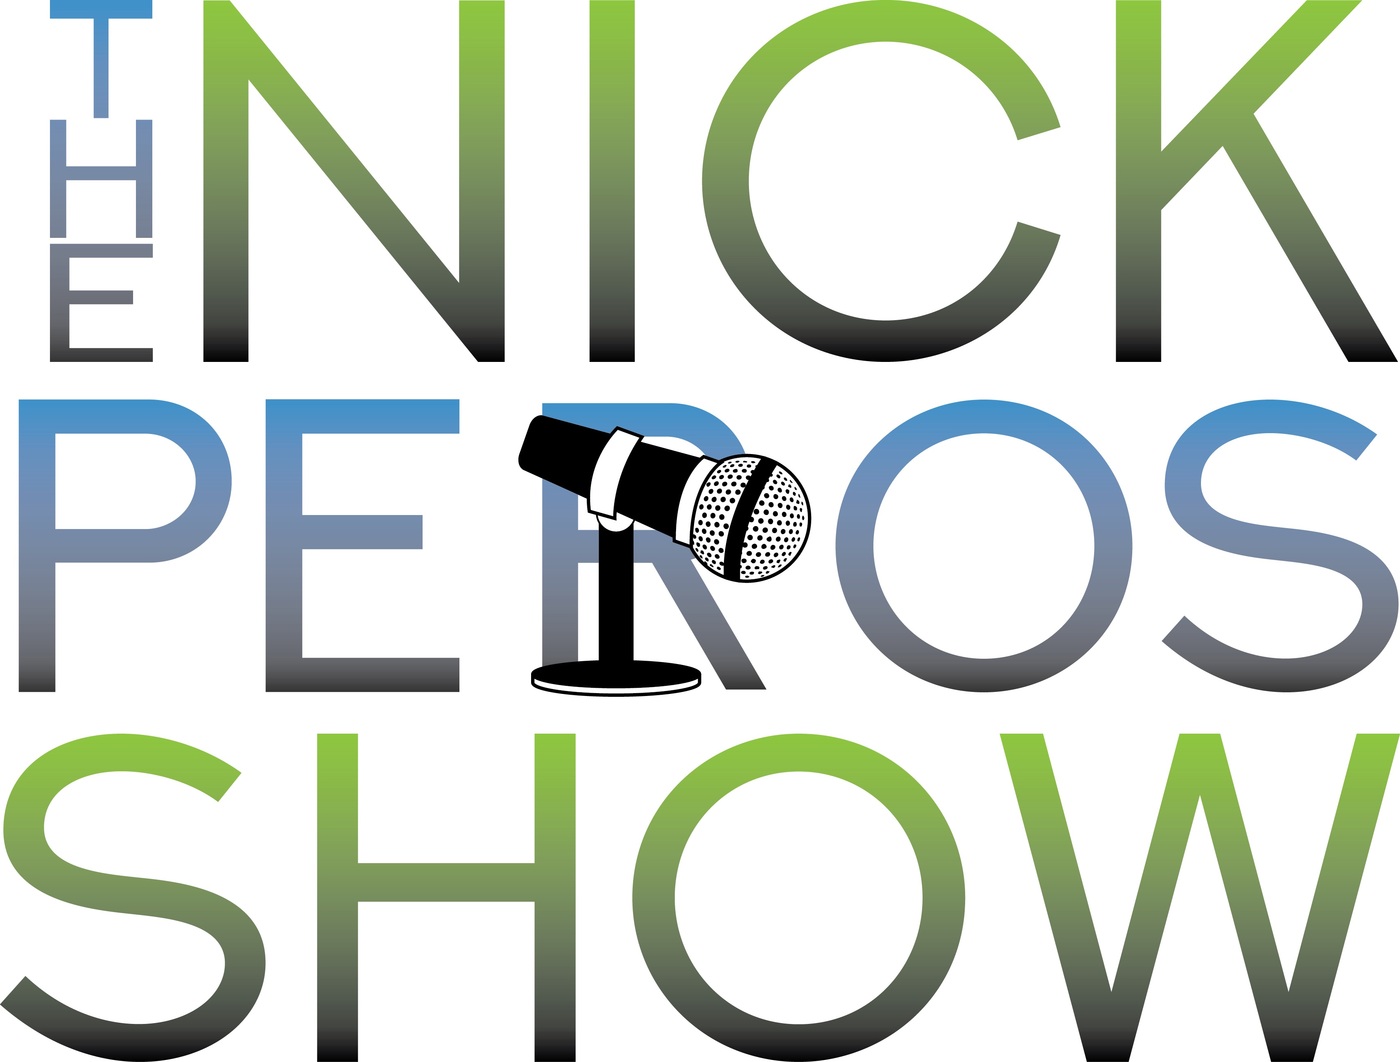 The Nick Peros Show - Episode 19 - Superstar Shakeup